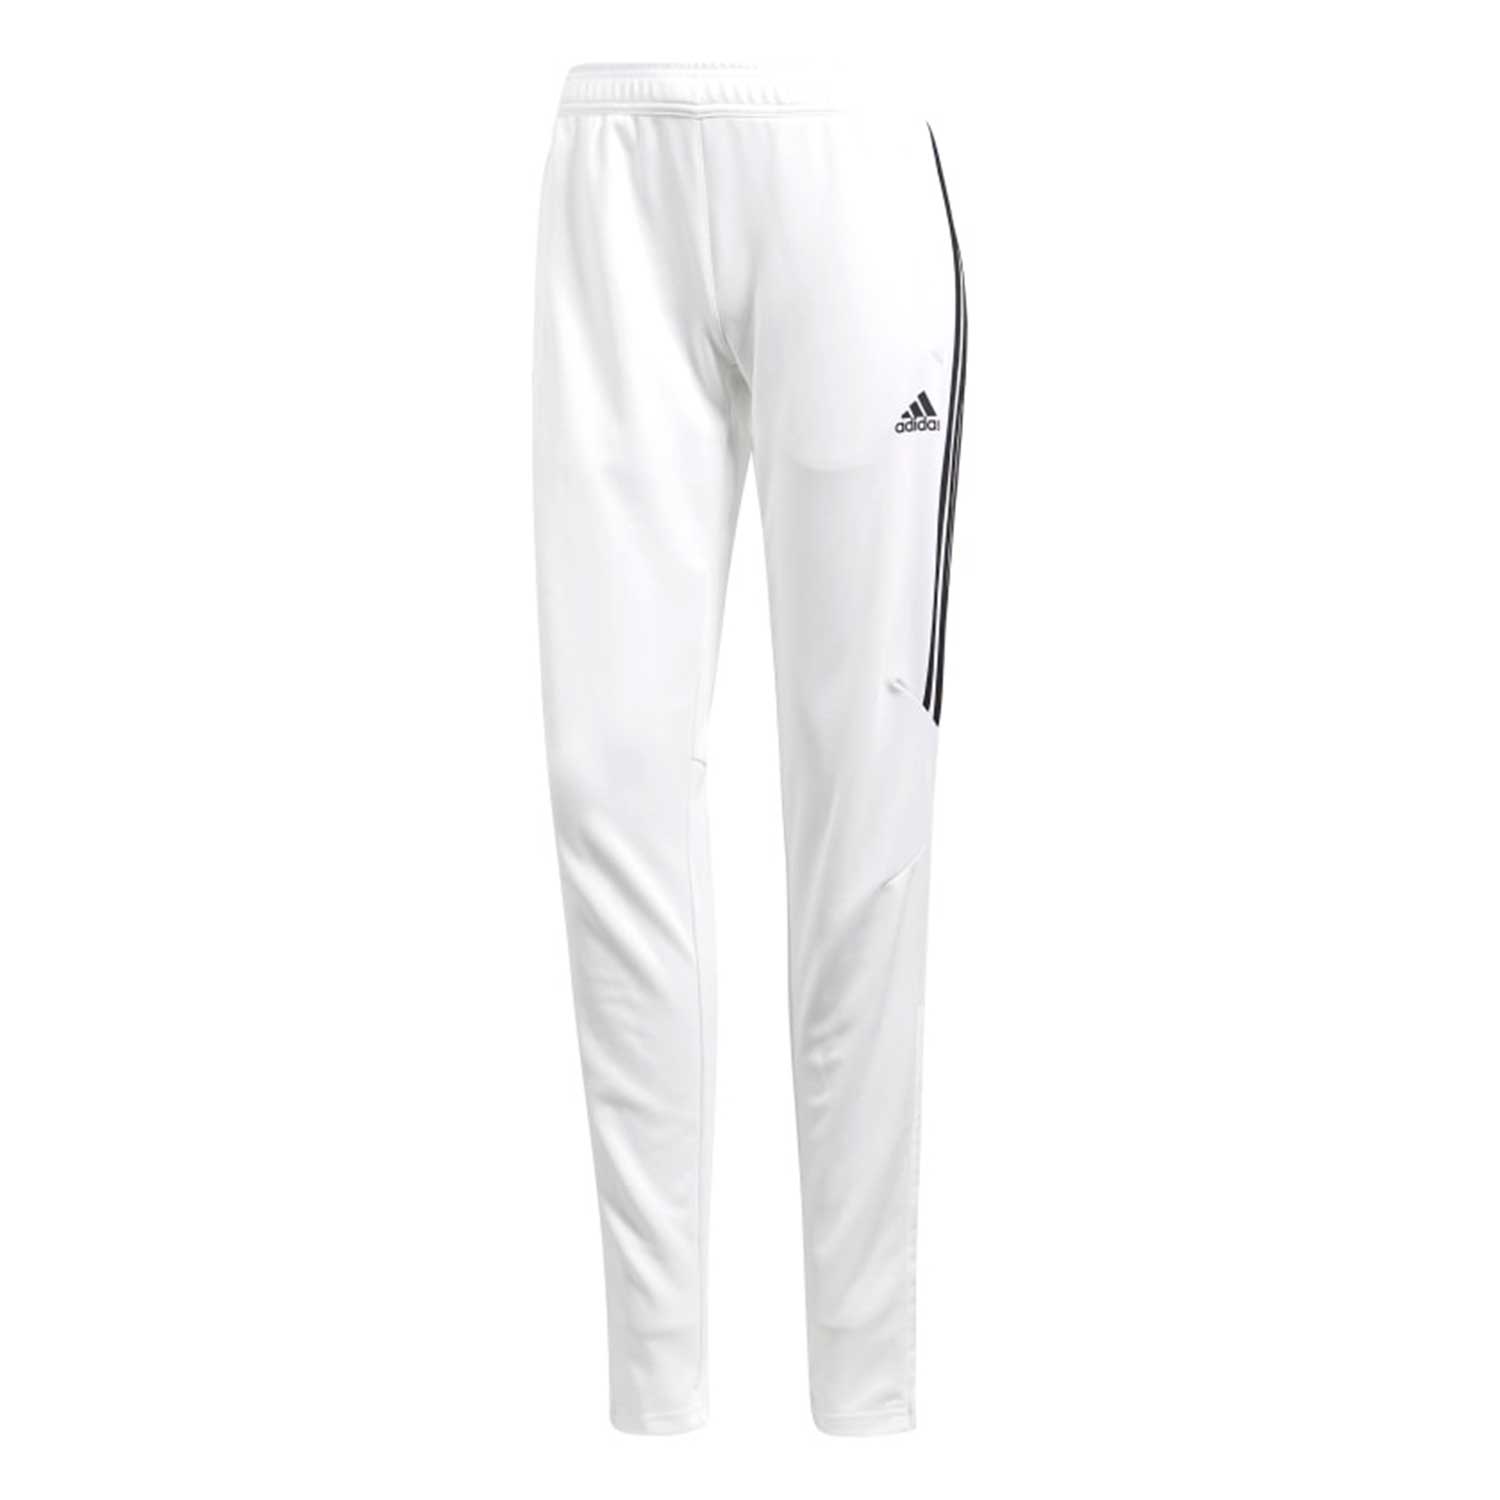 Adidas Women's Soccer Tiro 17 Training Pants White-Black cv5093